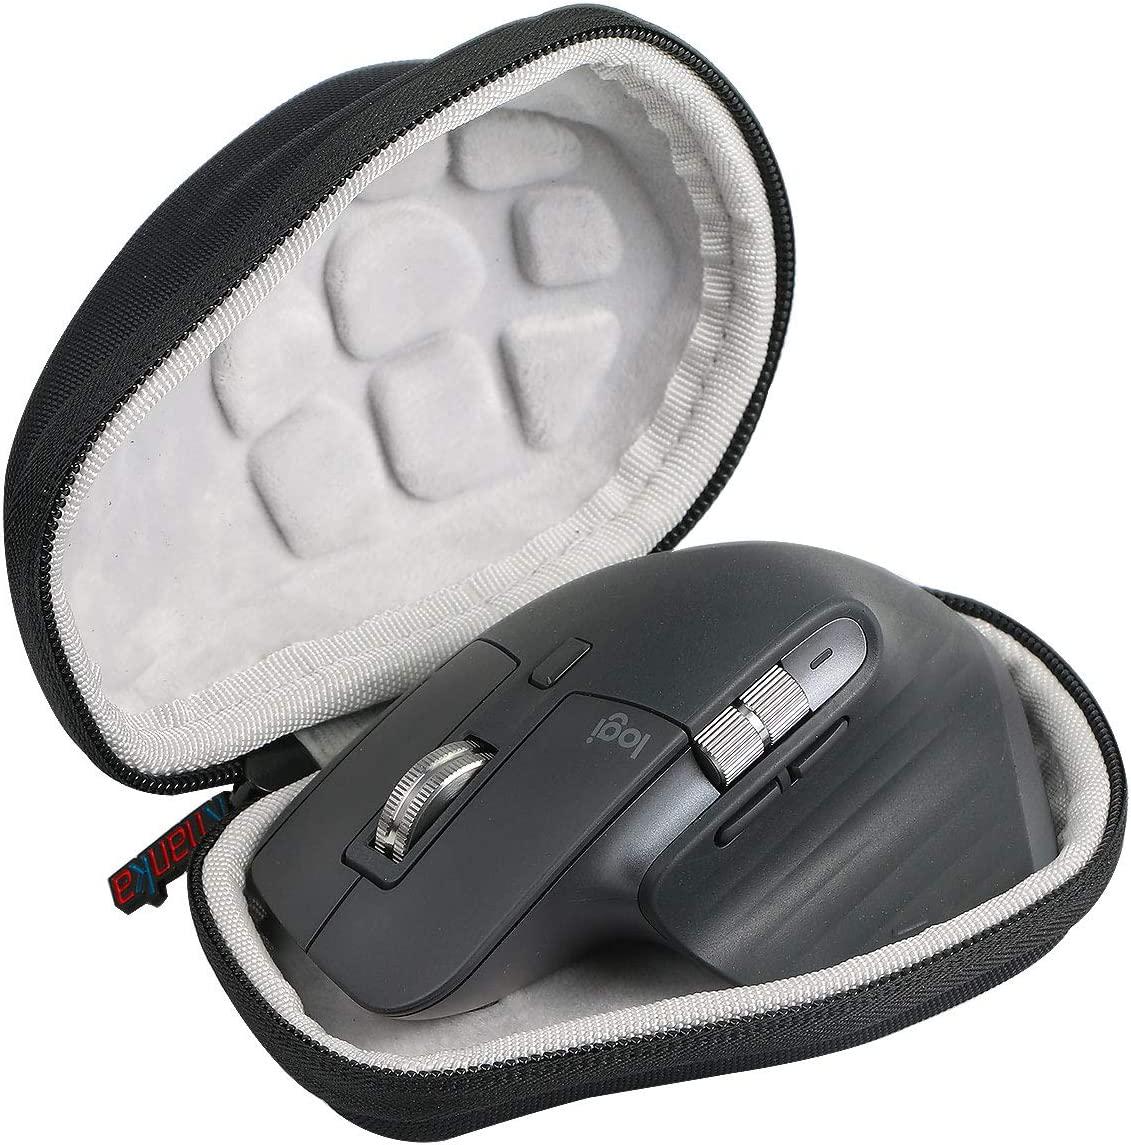 khanka, Khanka Hard Travel Case + Mouse Feet Pads Replacement for Logitech MX Master 3 / 3S Advanced Wireless Mouse